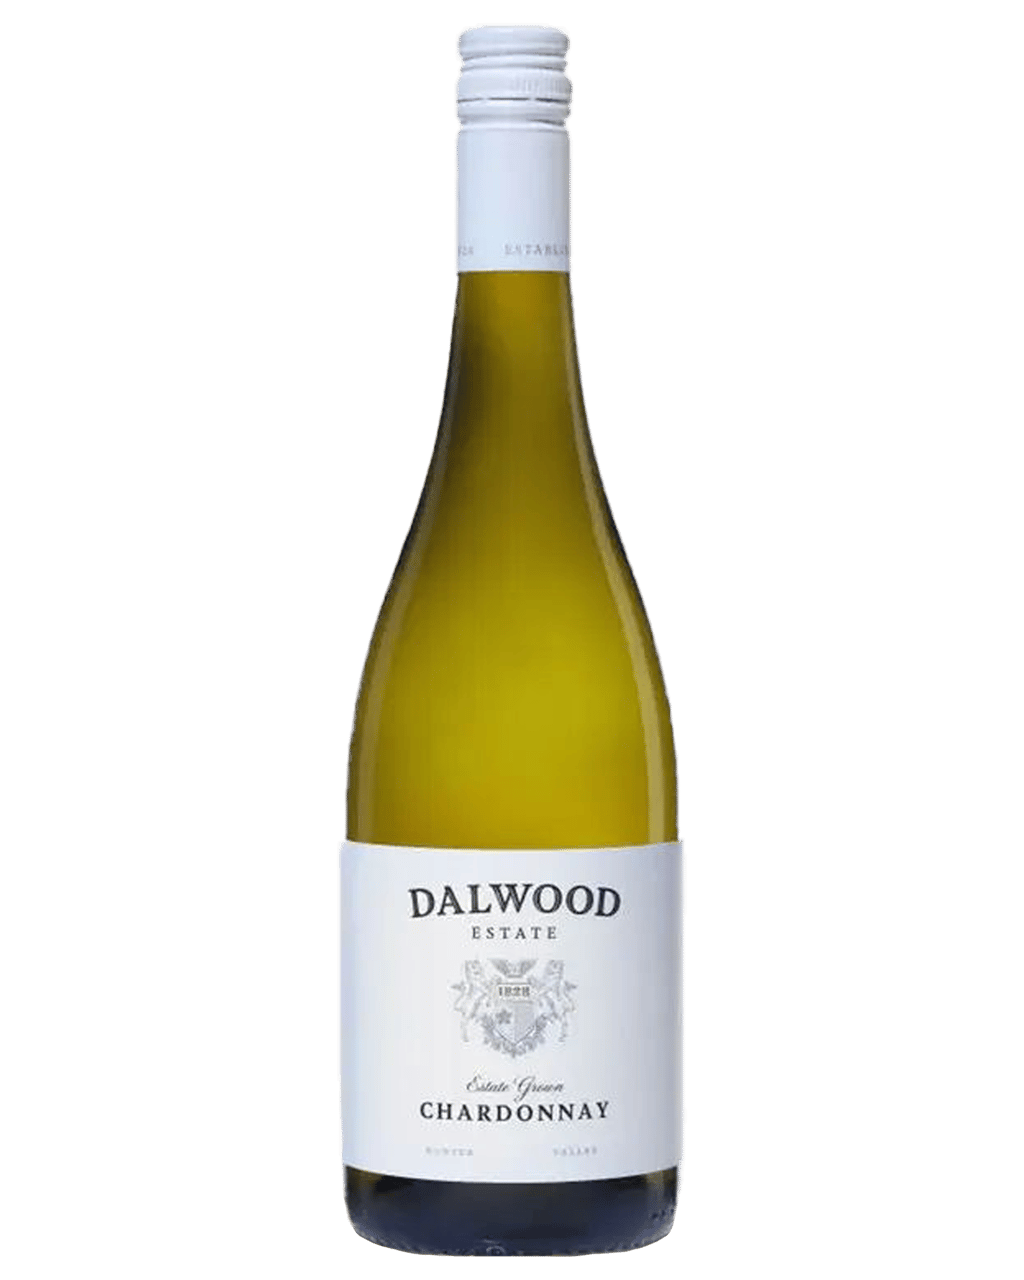 Dalwood Chardonnay 2020 Unbeatable Prices Buy Online Best Deals With Delivery Dan Murphy S